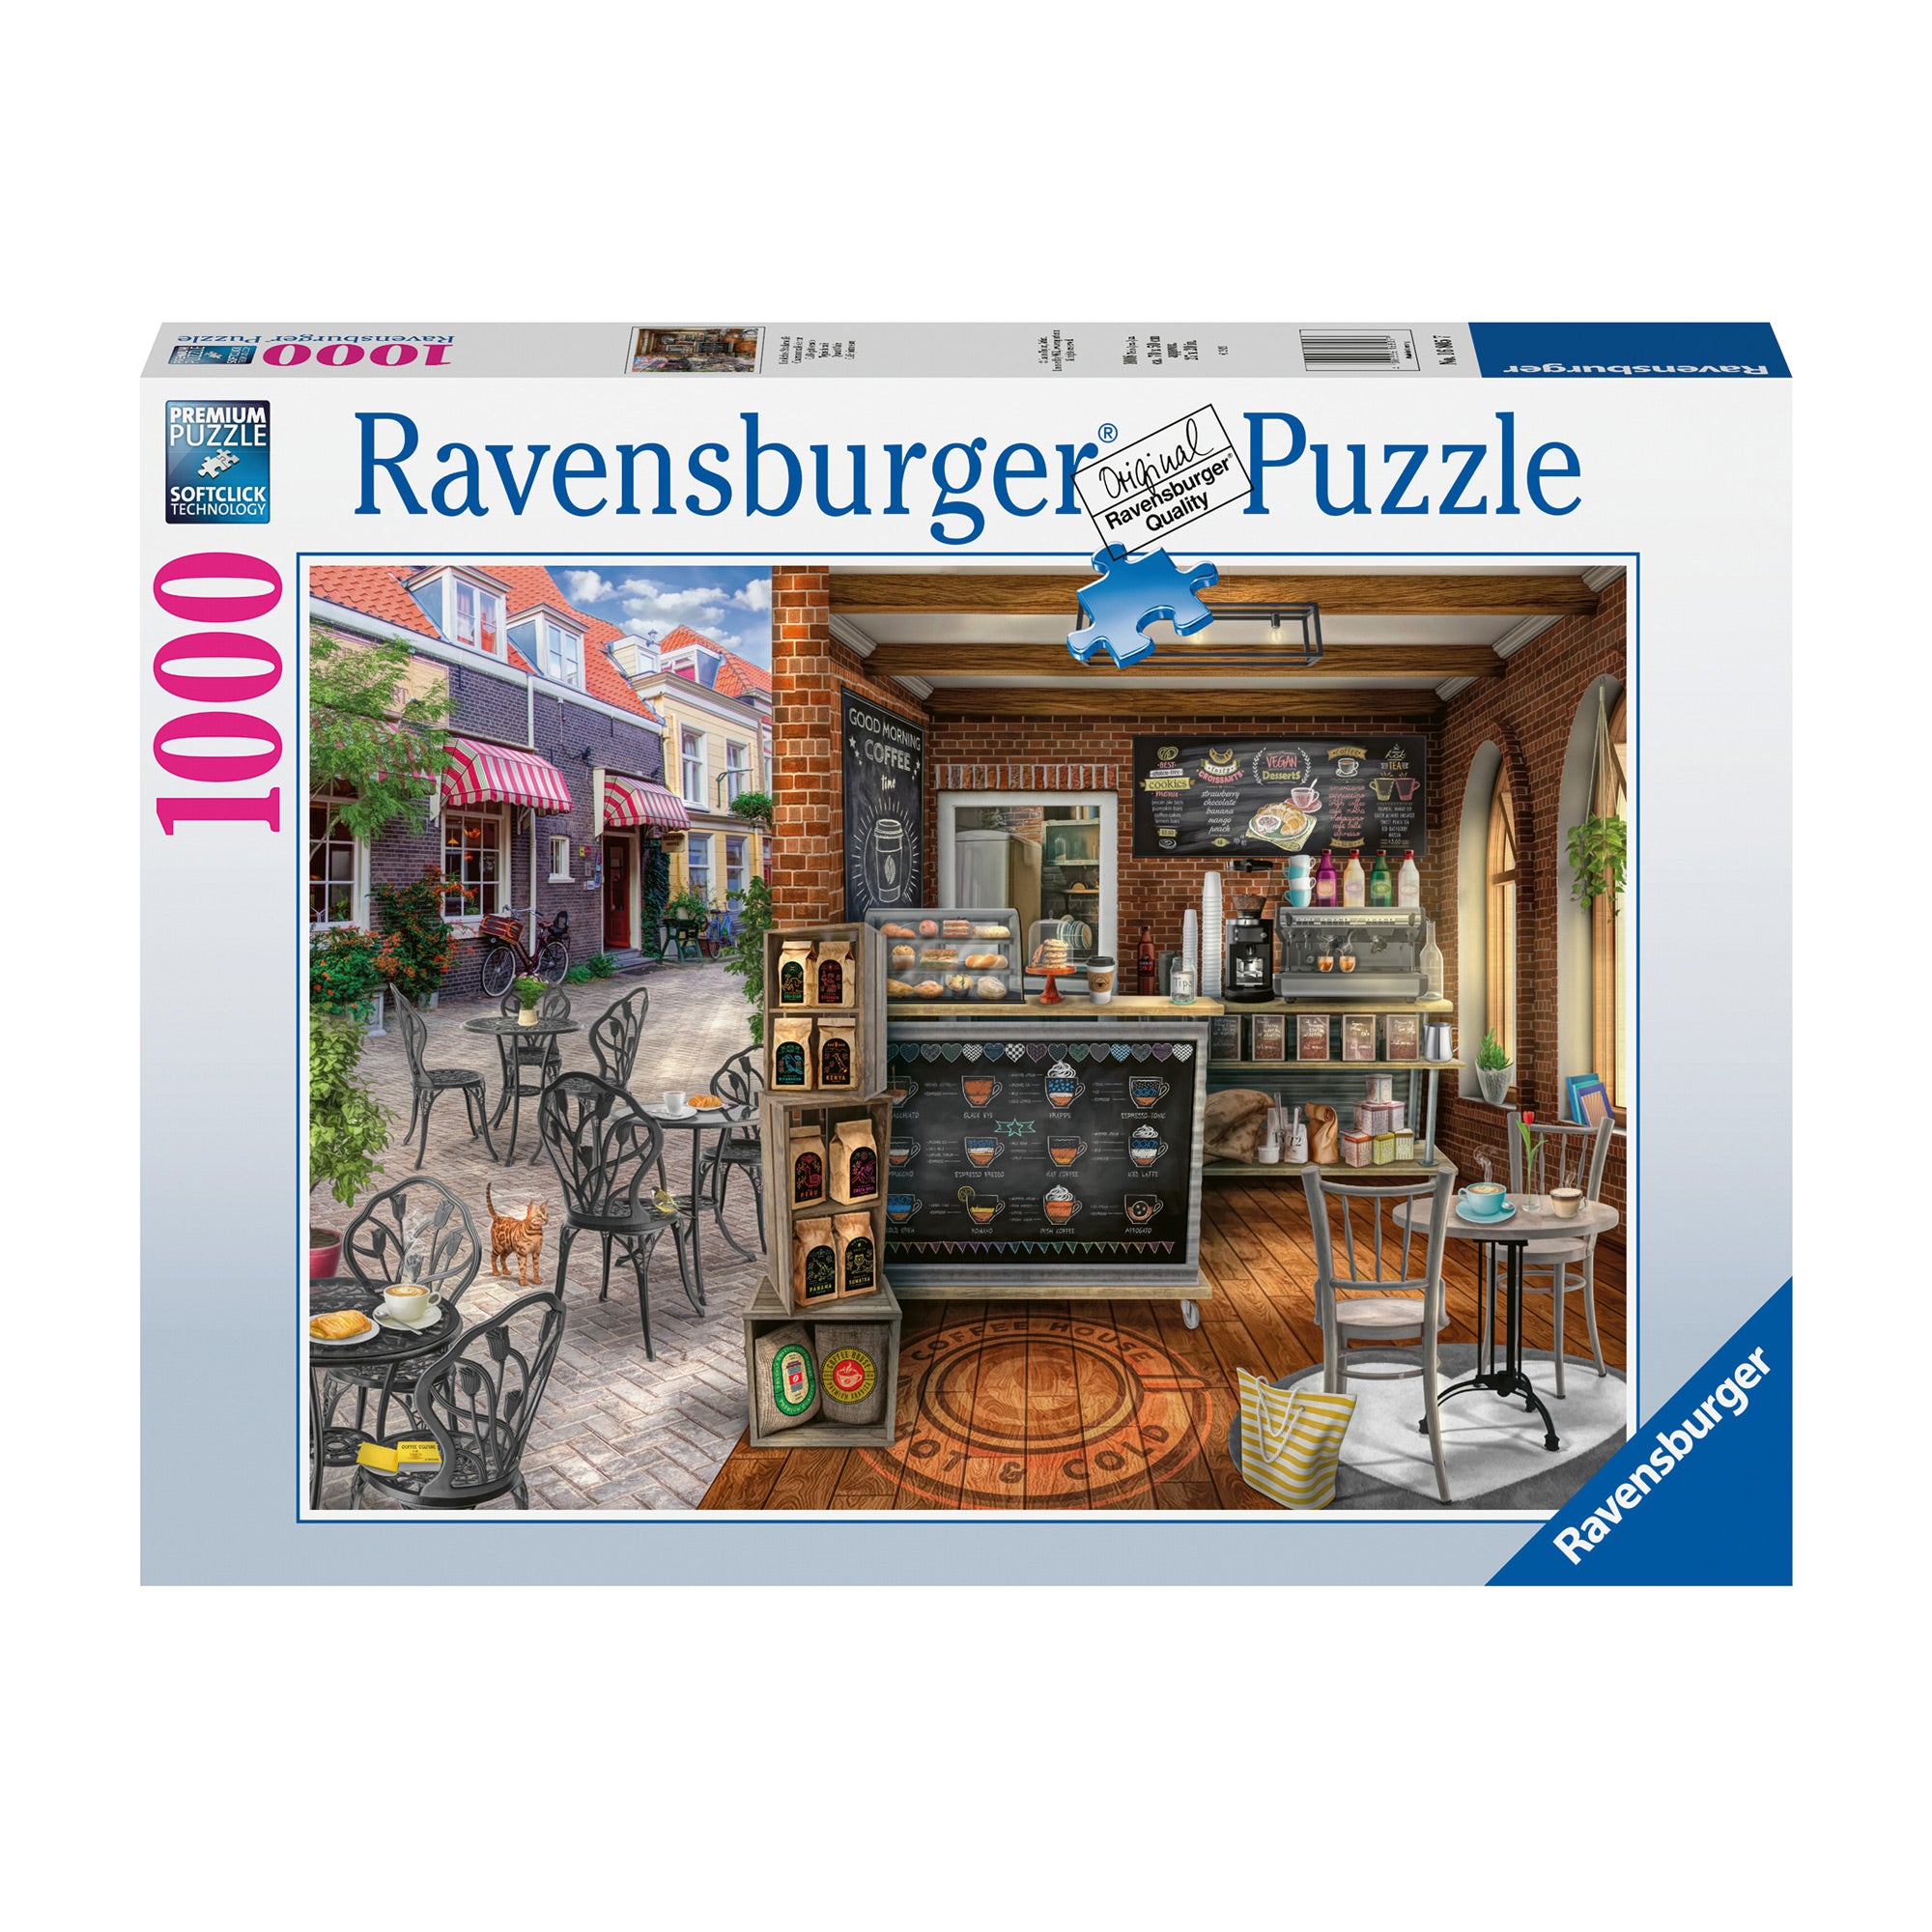 Ravensburger (16461) - Waterfall Safari - 1500 pieces puzzle